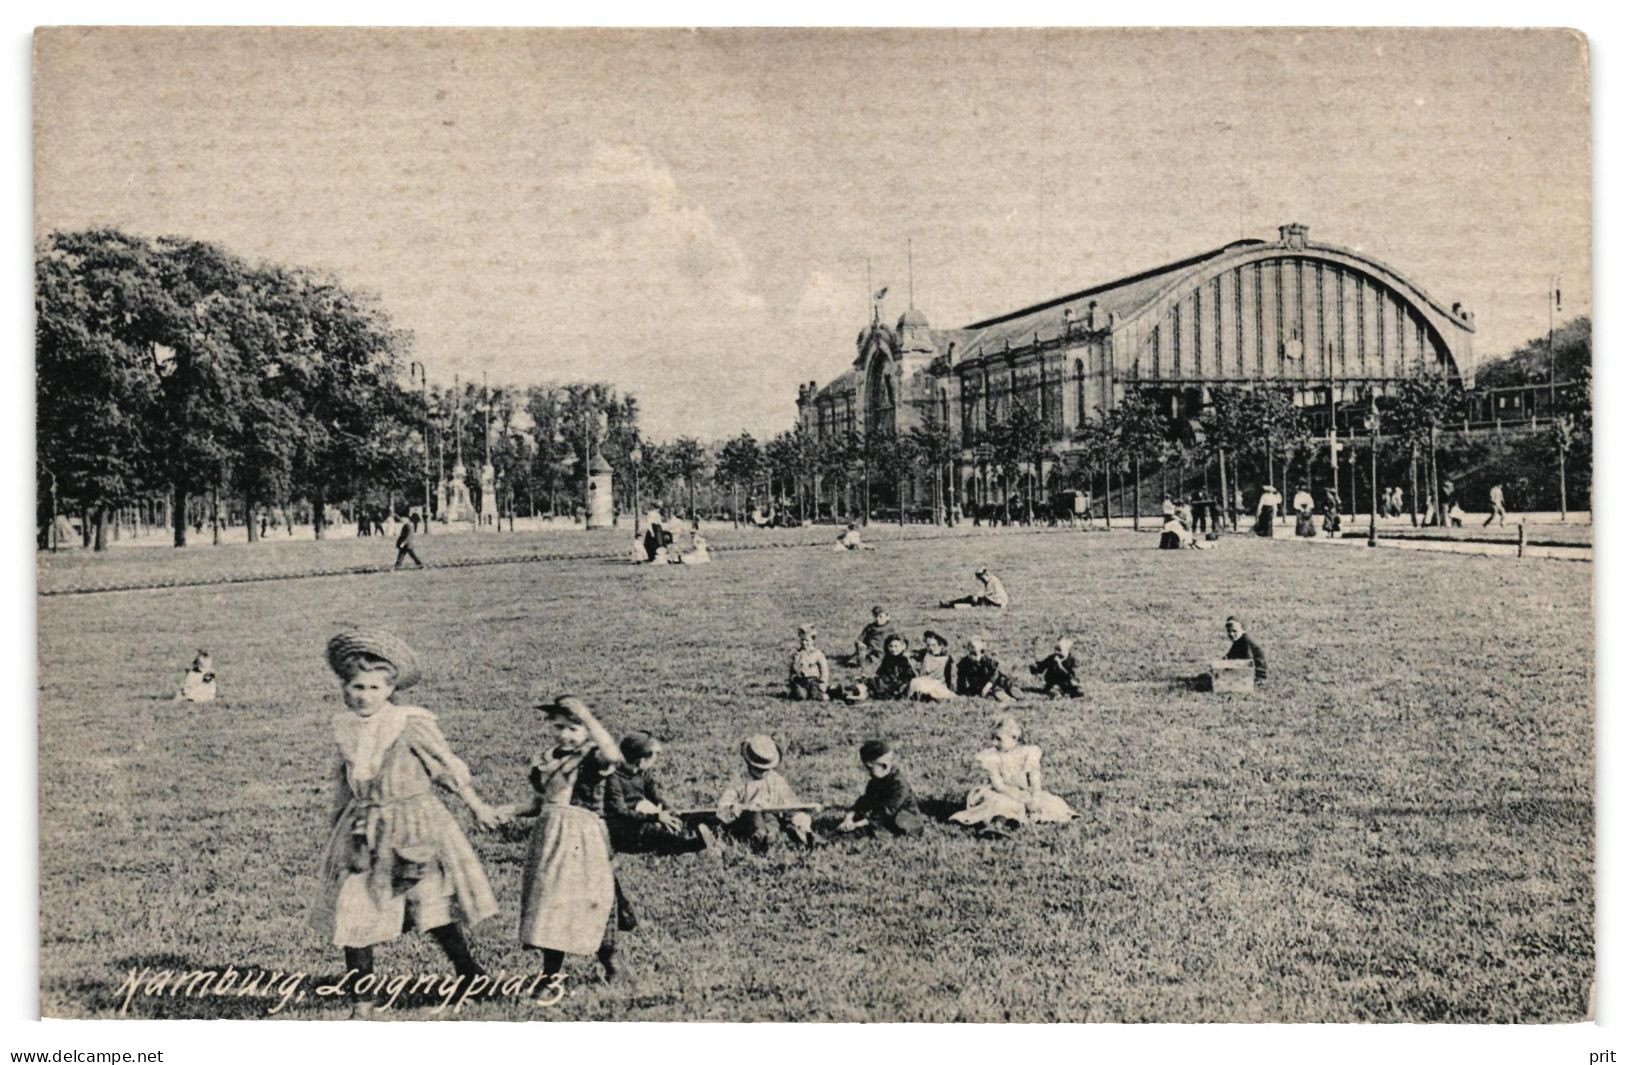 Loignyplatz Hamburg Children On The Grass 1906 Unused Real Photo Postcard. Publisher Dr Trnkler Co Hamburg - Eimsbüttel